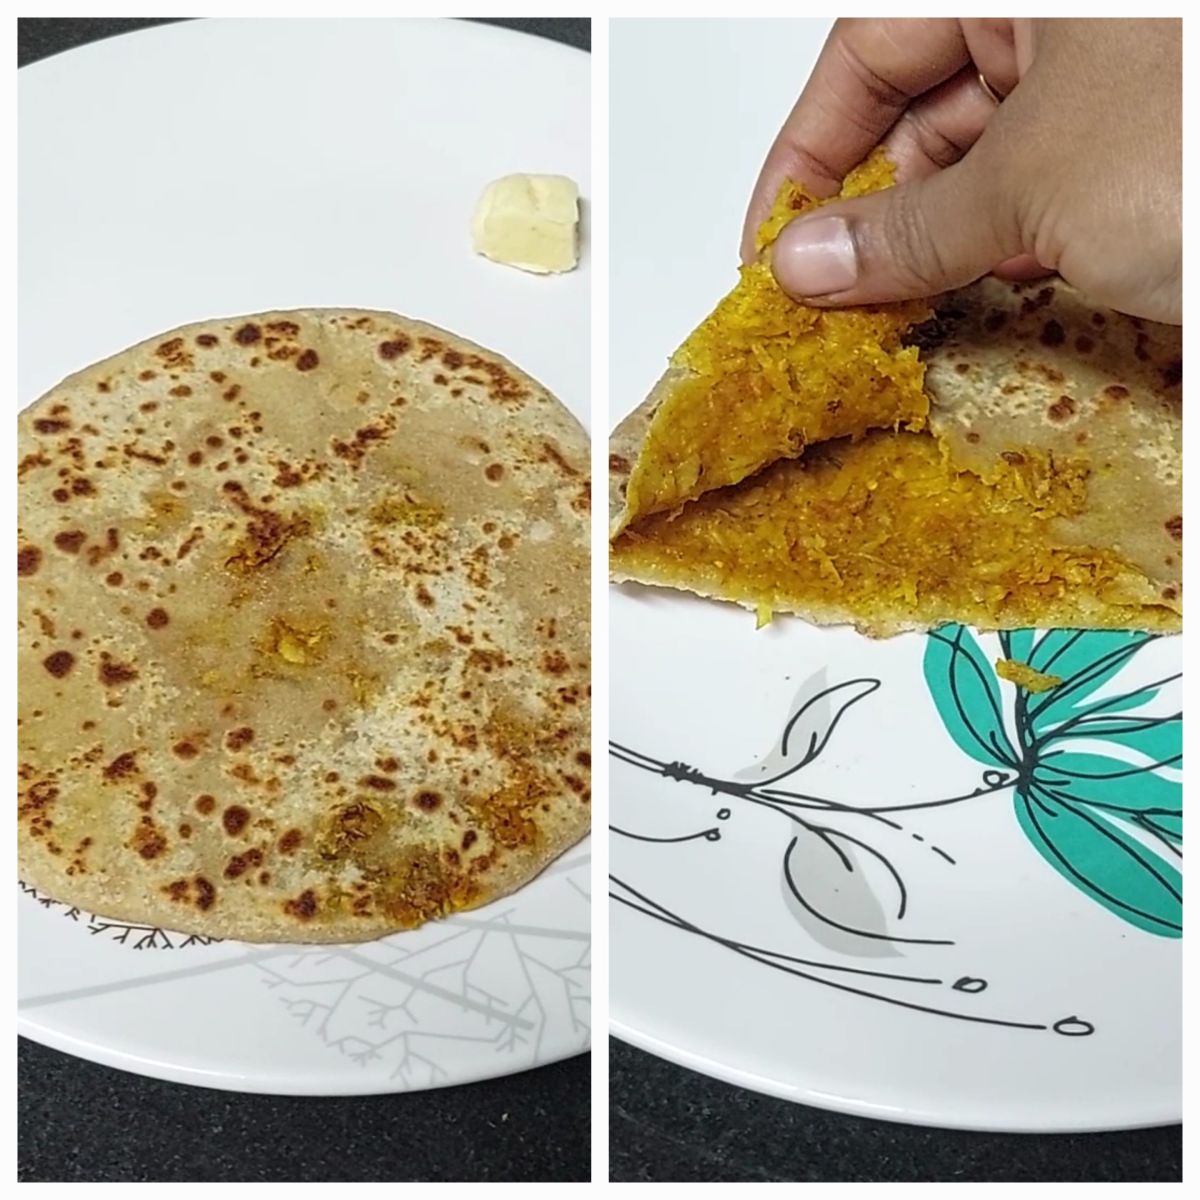 Mooli (Radish) Paratha Recipe: Delicious Indian Flatbread